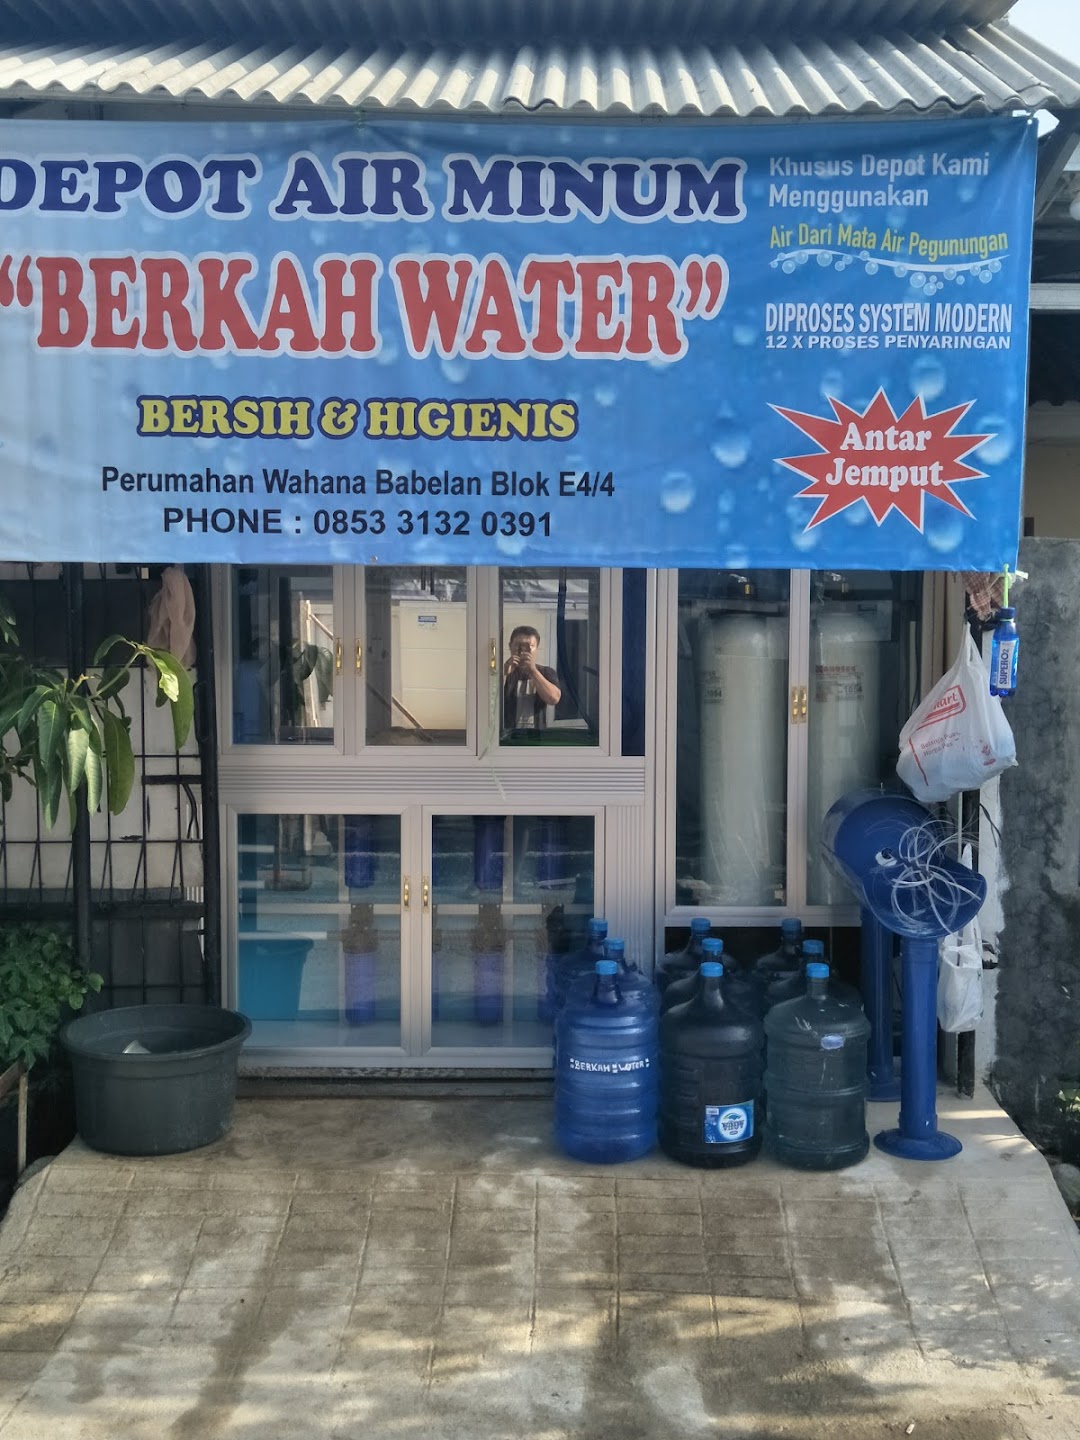 BERKAH WATER Depot Air minum